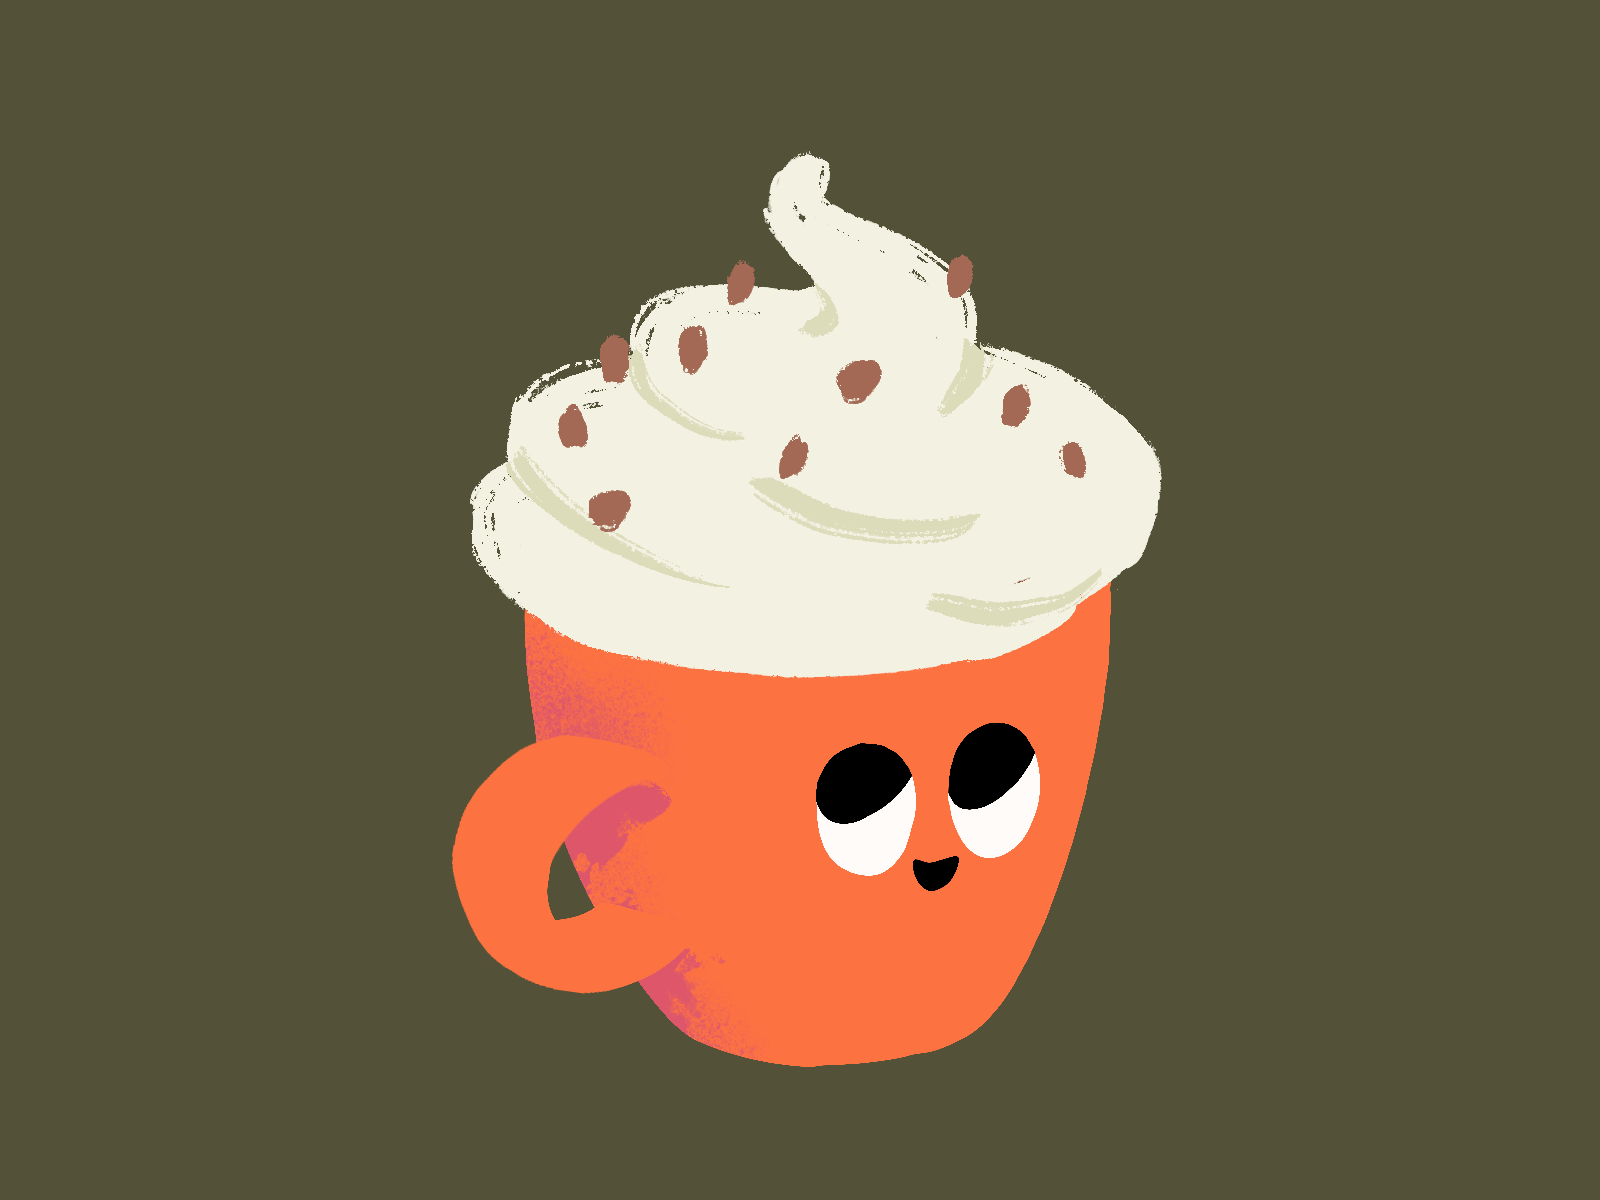 08. Hot drink